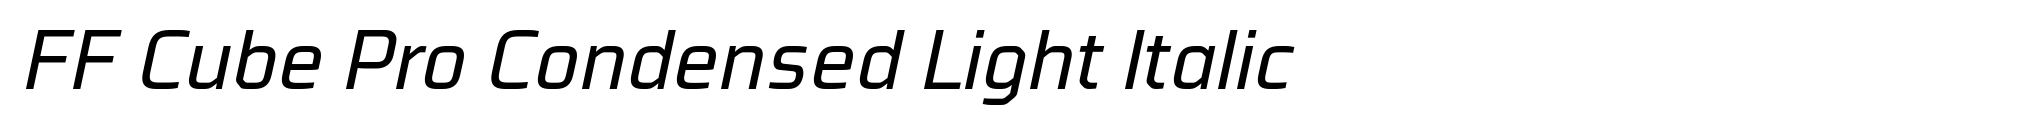 FF Cube Pro Condensed Light Italic image